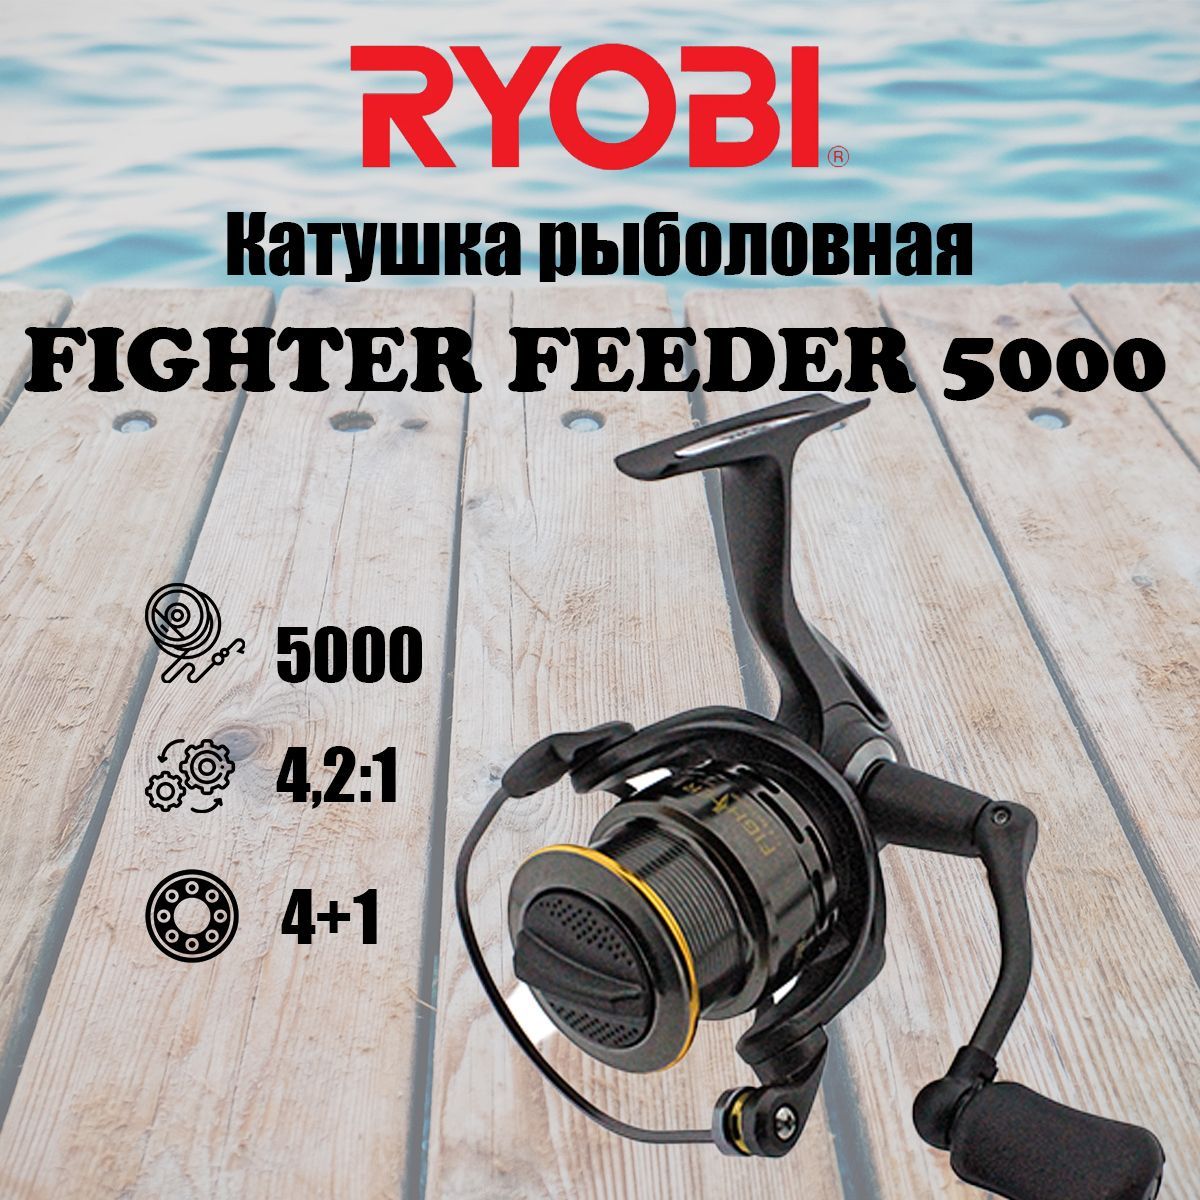 Катушка для рыбалки RYOBI FIGHTER FEEDER aqua129176